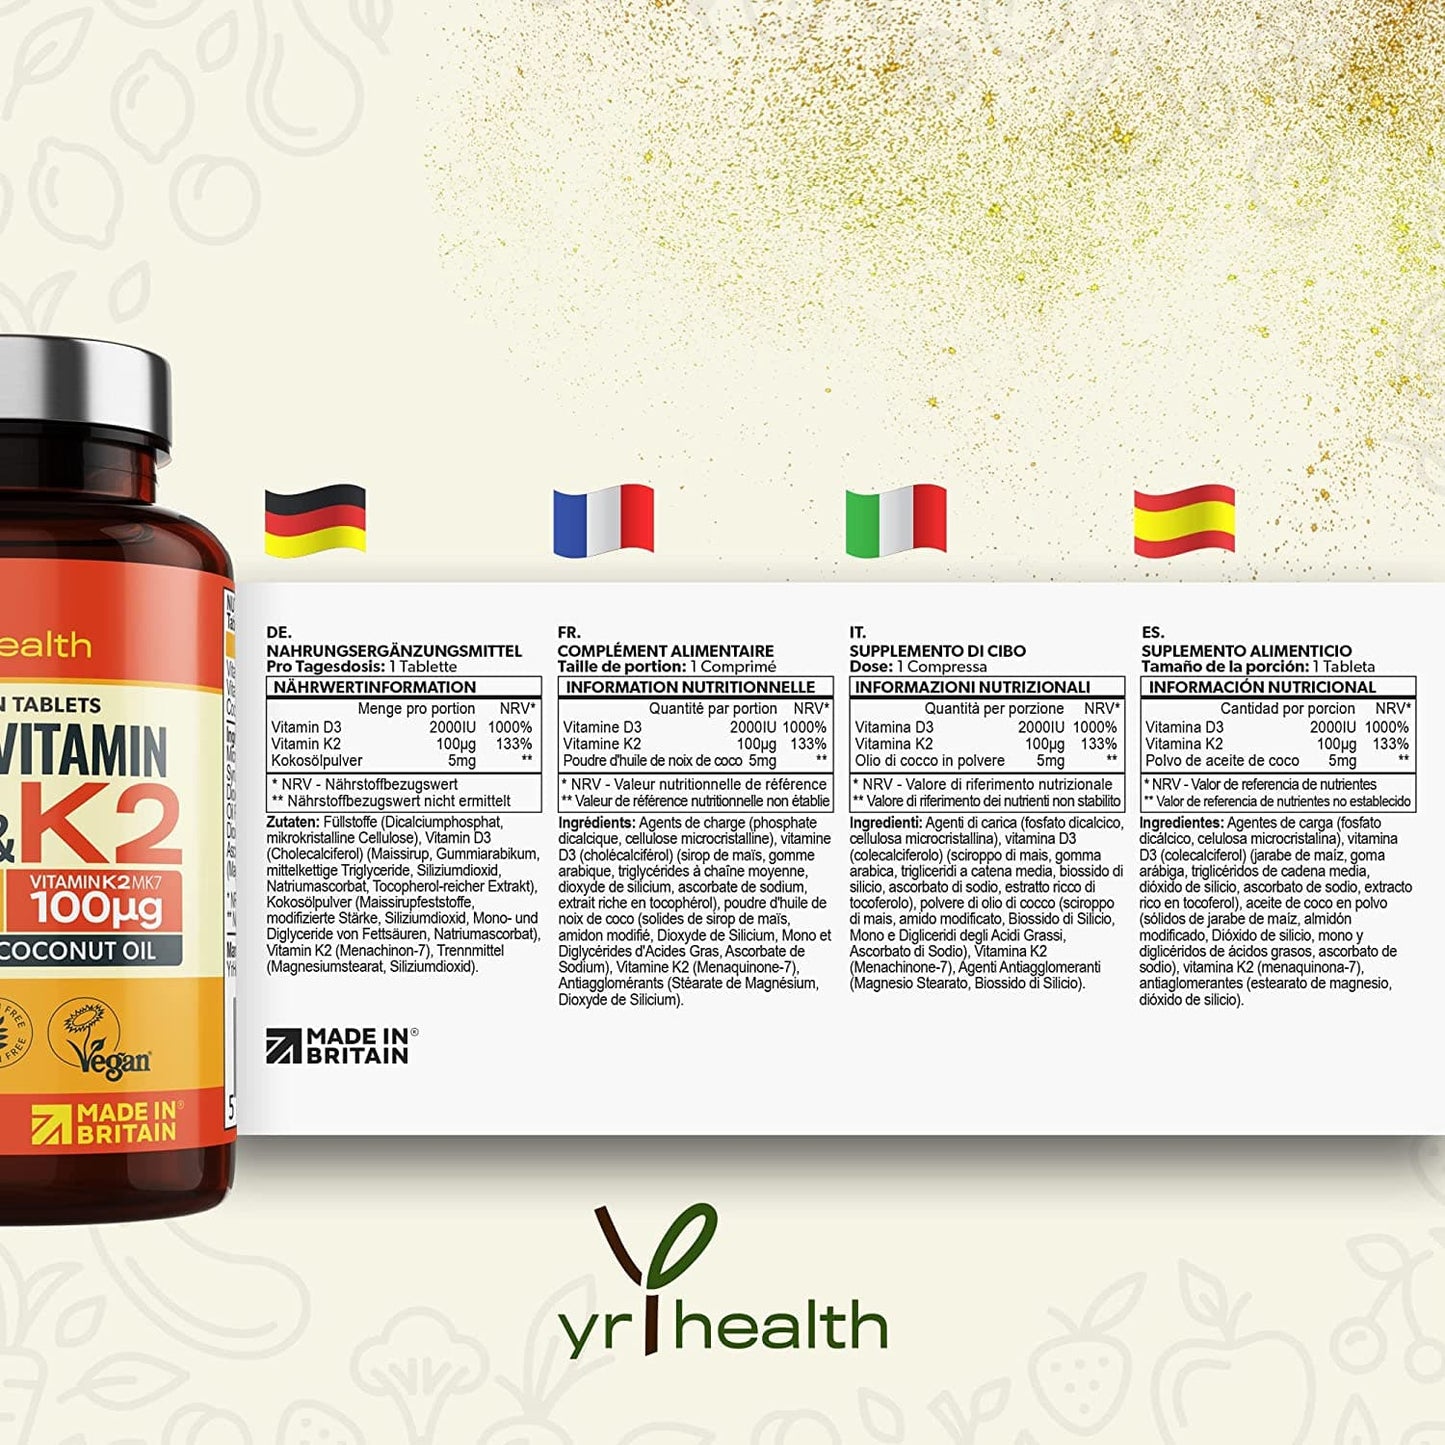 Vegan Vitamin D3 K2 Tablets High Strength & Coconut Oil for Absorption - Vitamin D 2000iu & Vitamin K2 Mk7 100mcg Plant Based Supplement for Immune System, Bones, Blood Calcium Levels